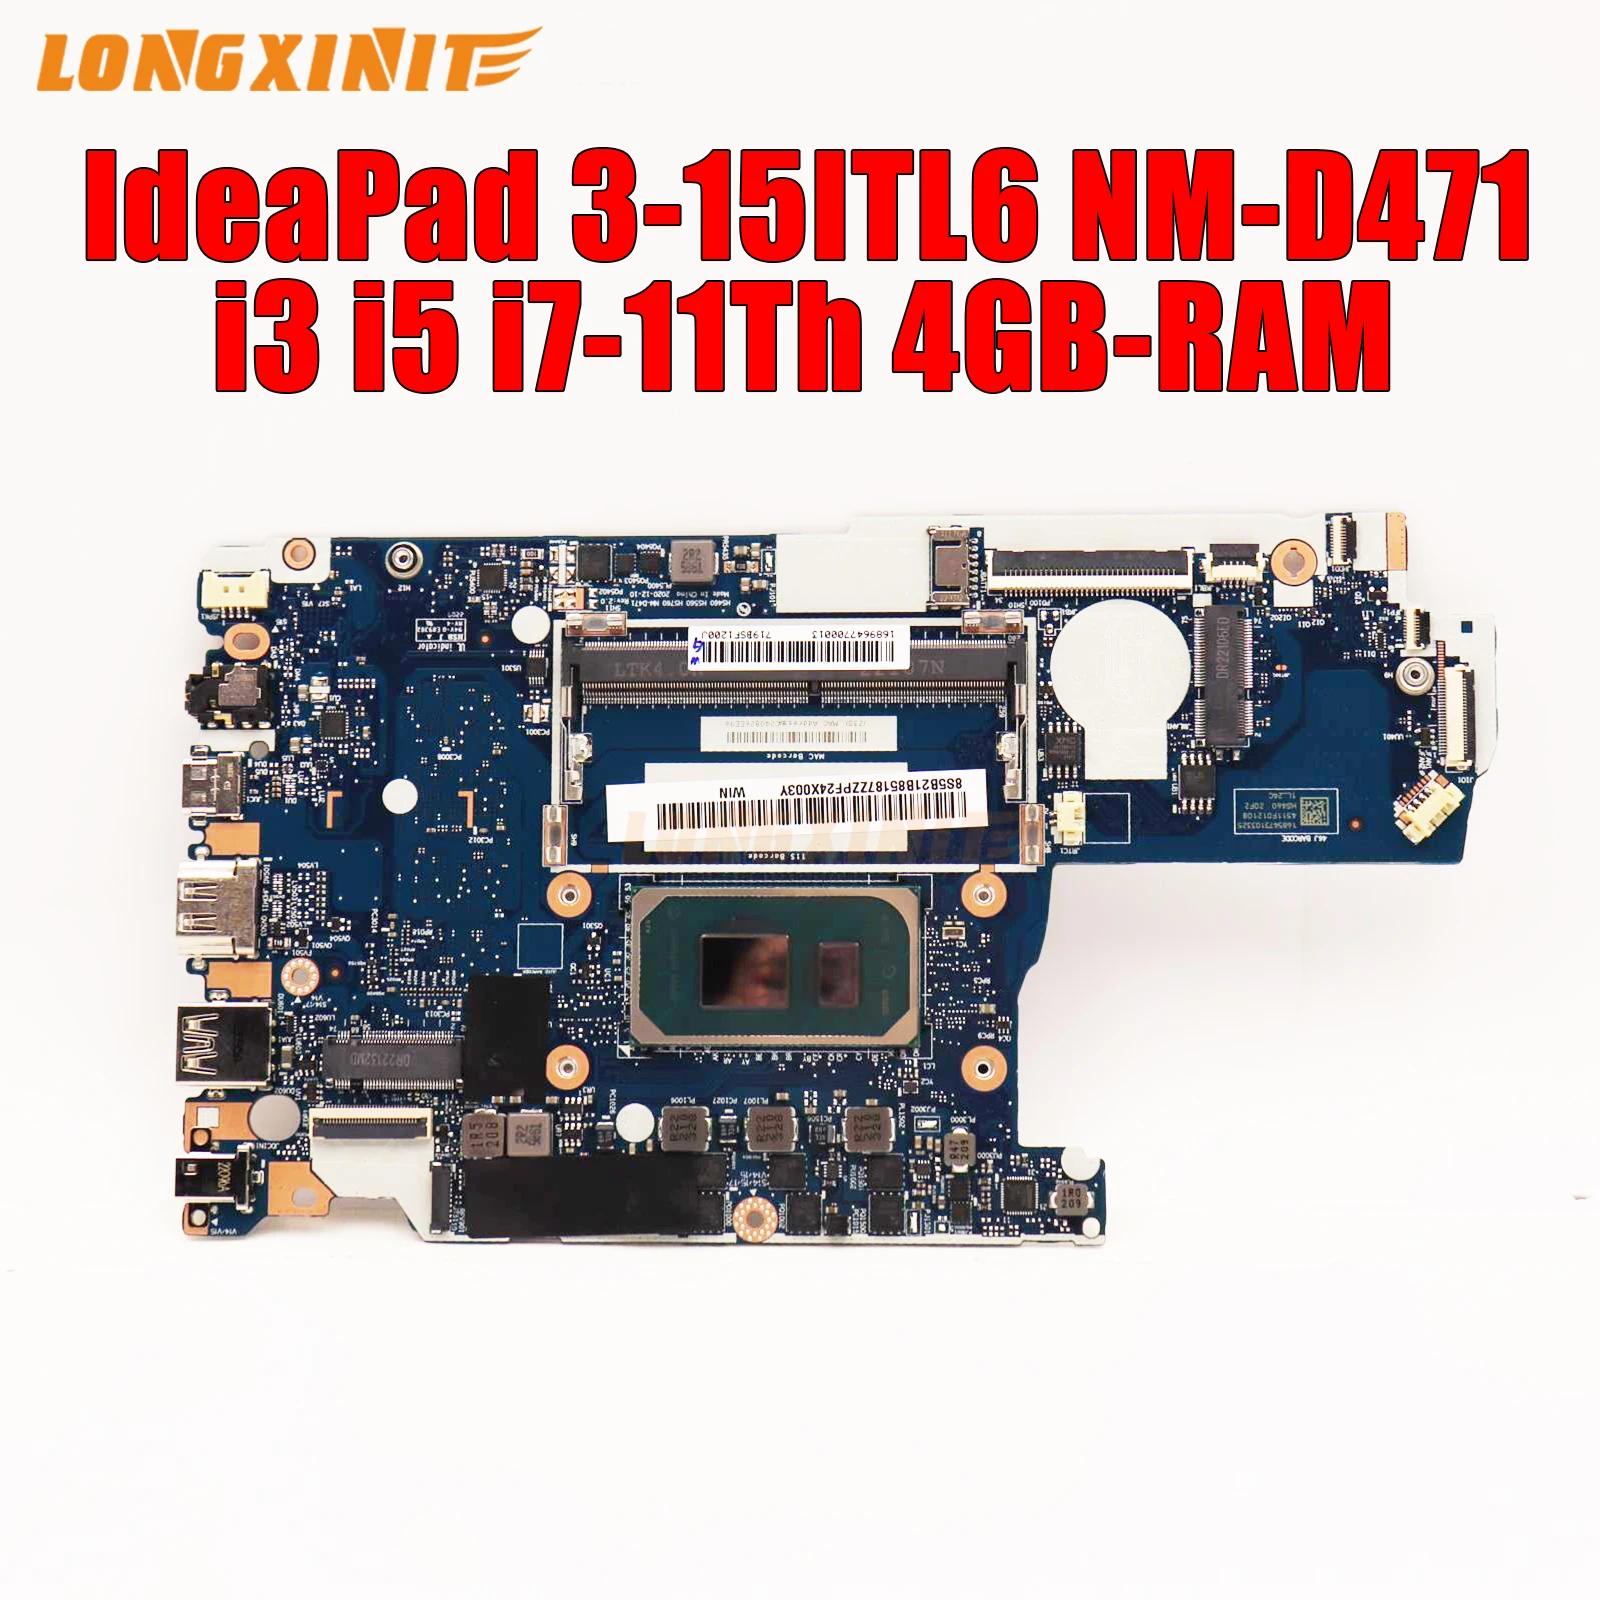 NM-D471. Lenovo Ideapad Ʈ , 3-15ITL6, 3-14ITL6. CPU : I3-1115G4, I5-1135G7, I7-1165G7CPU.4GB-RAM